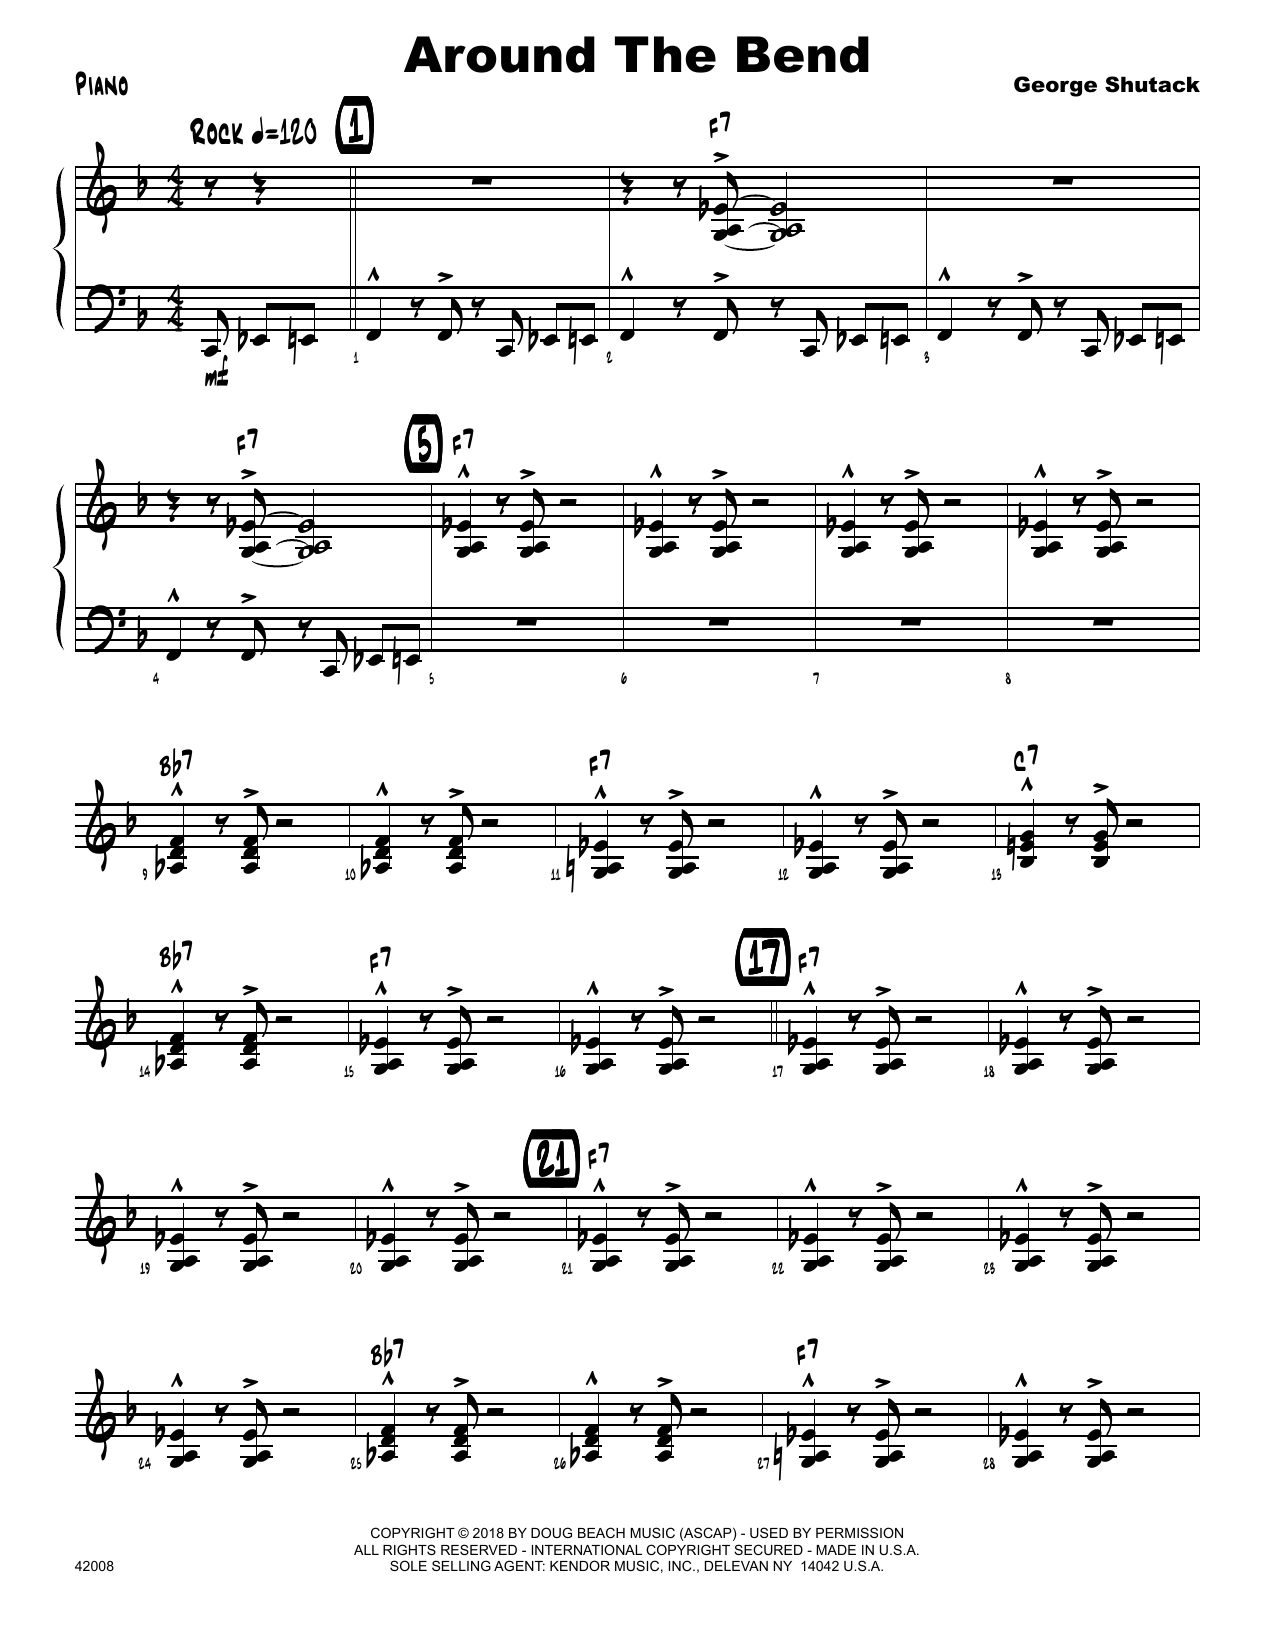 Download George Shutack Around The Bend - Piano Sheet Music